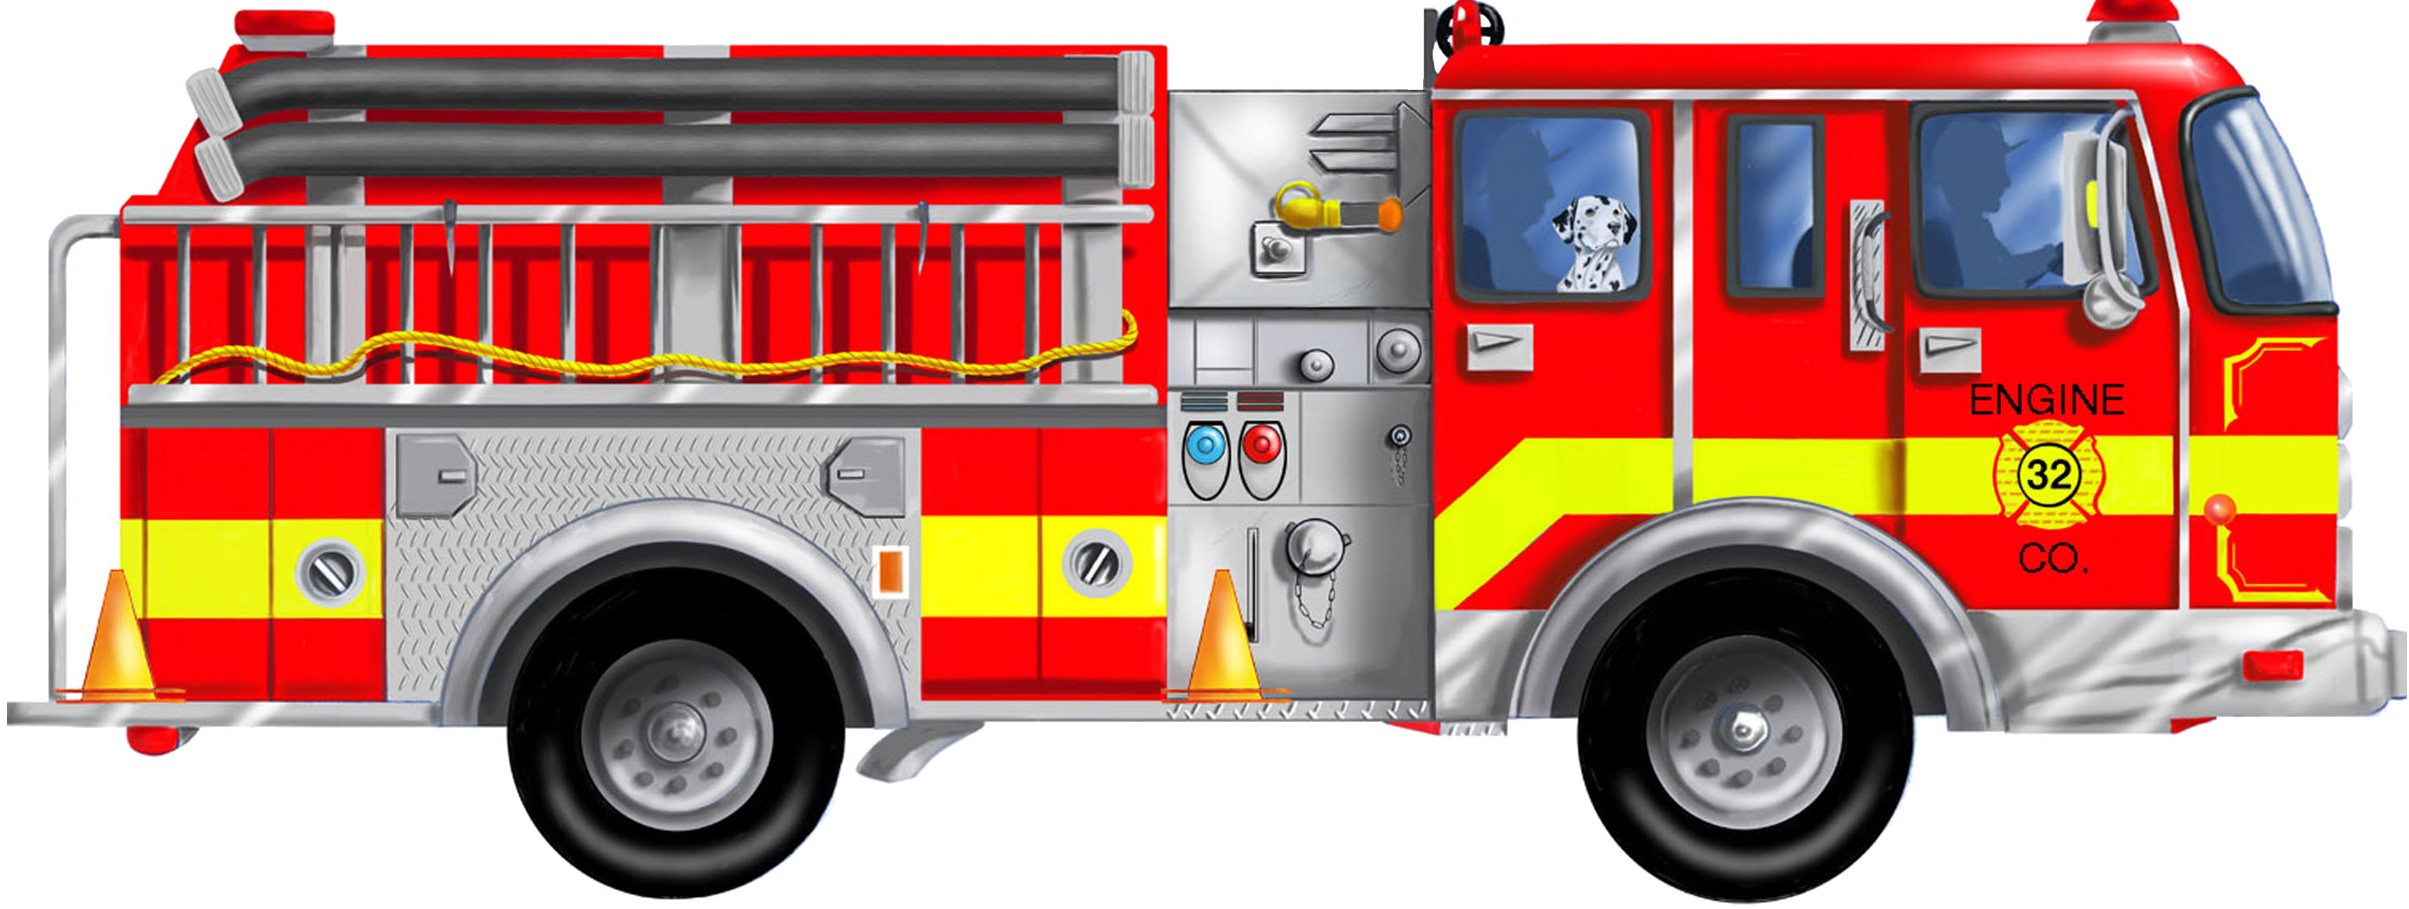 Fire Truck Firetruck Free Download Png Clipart